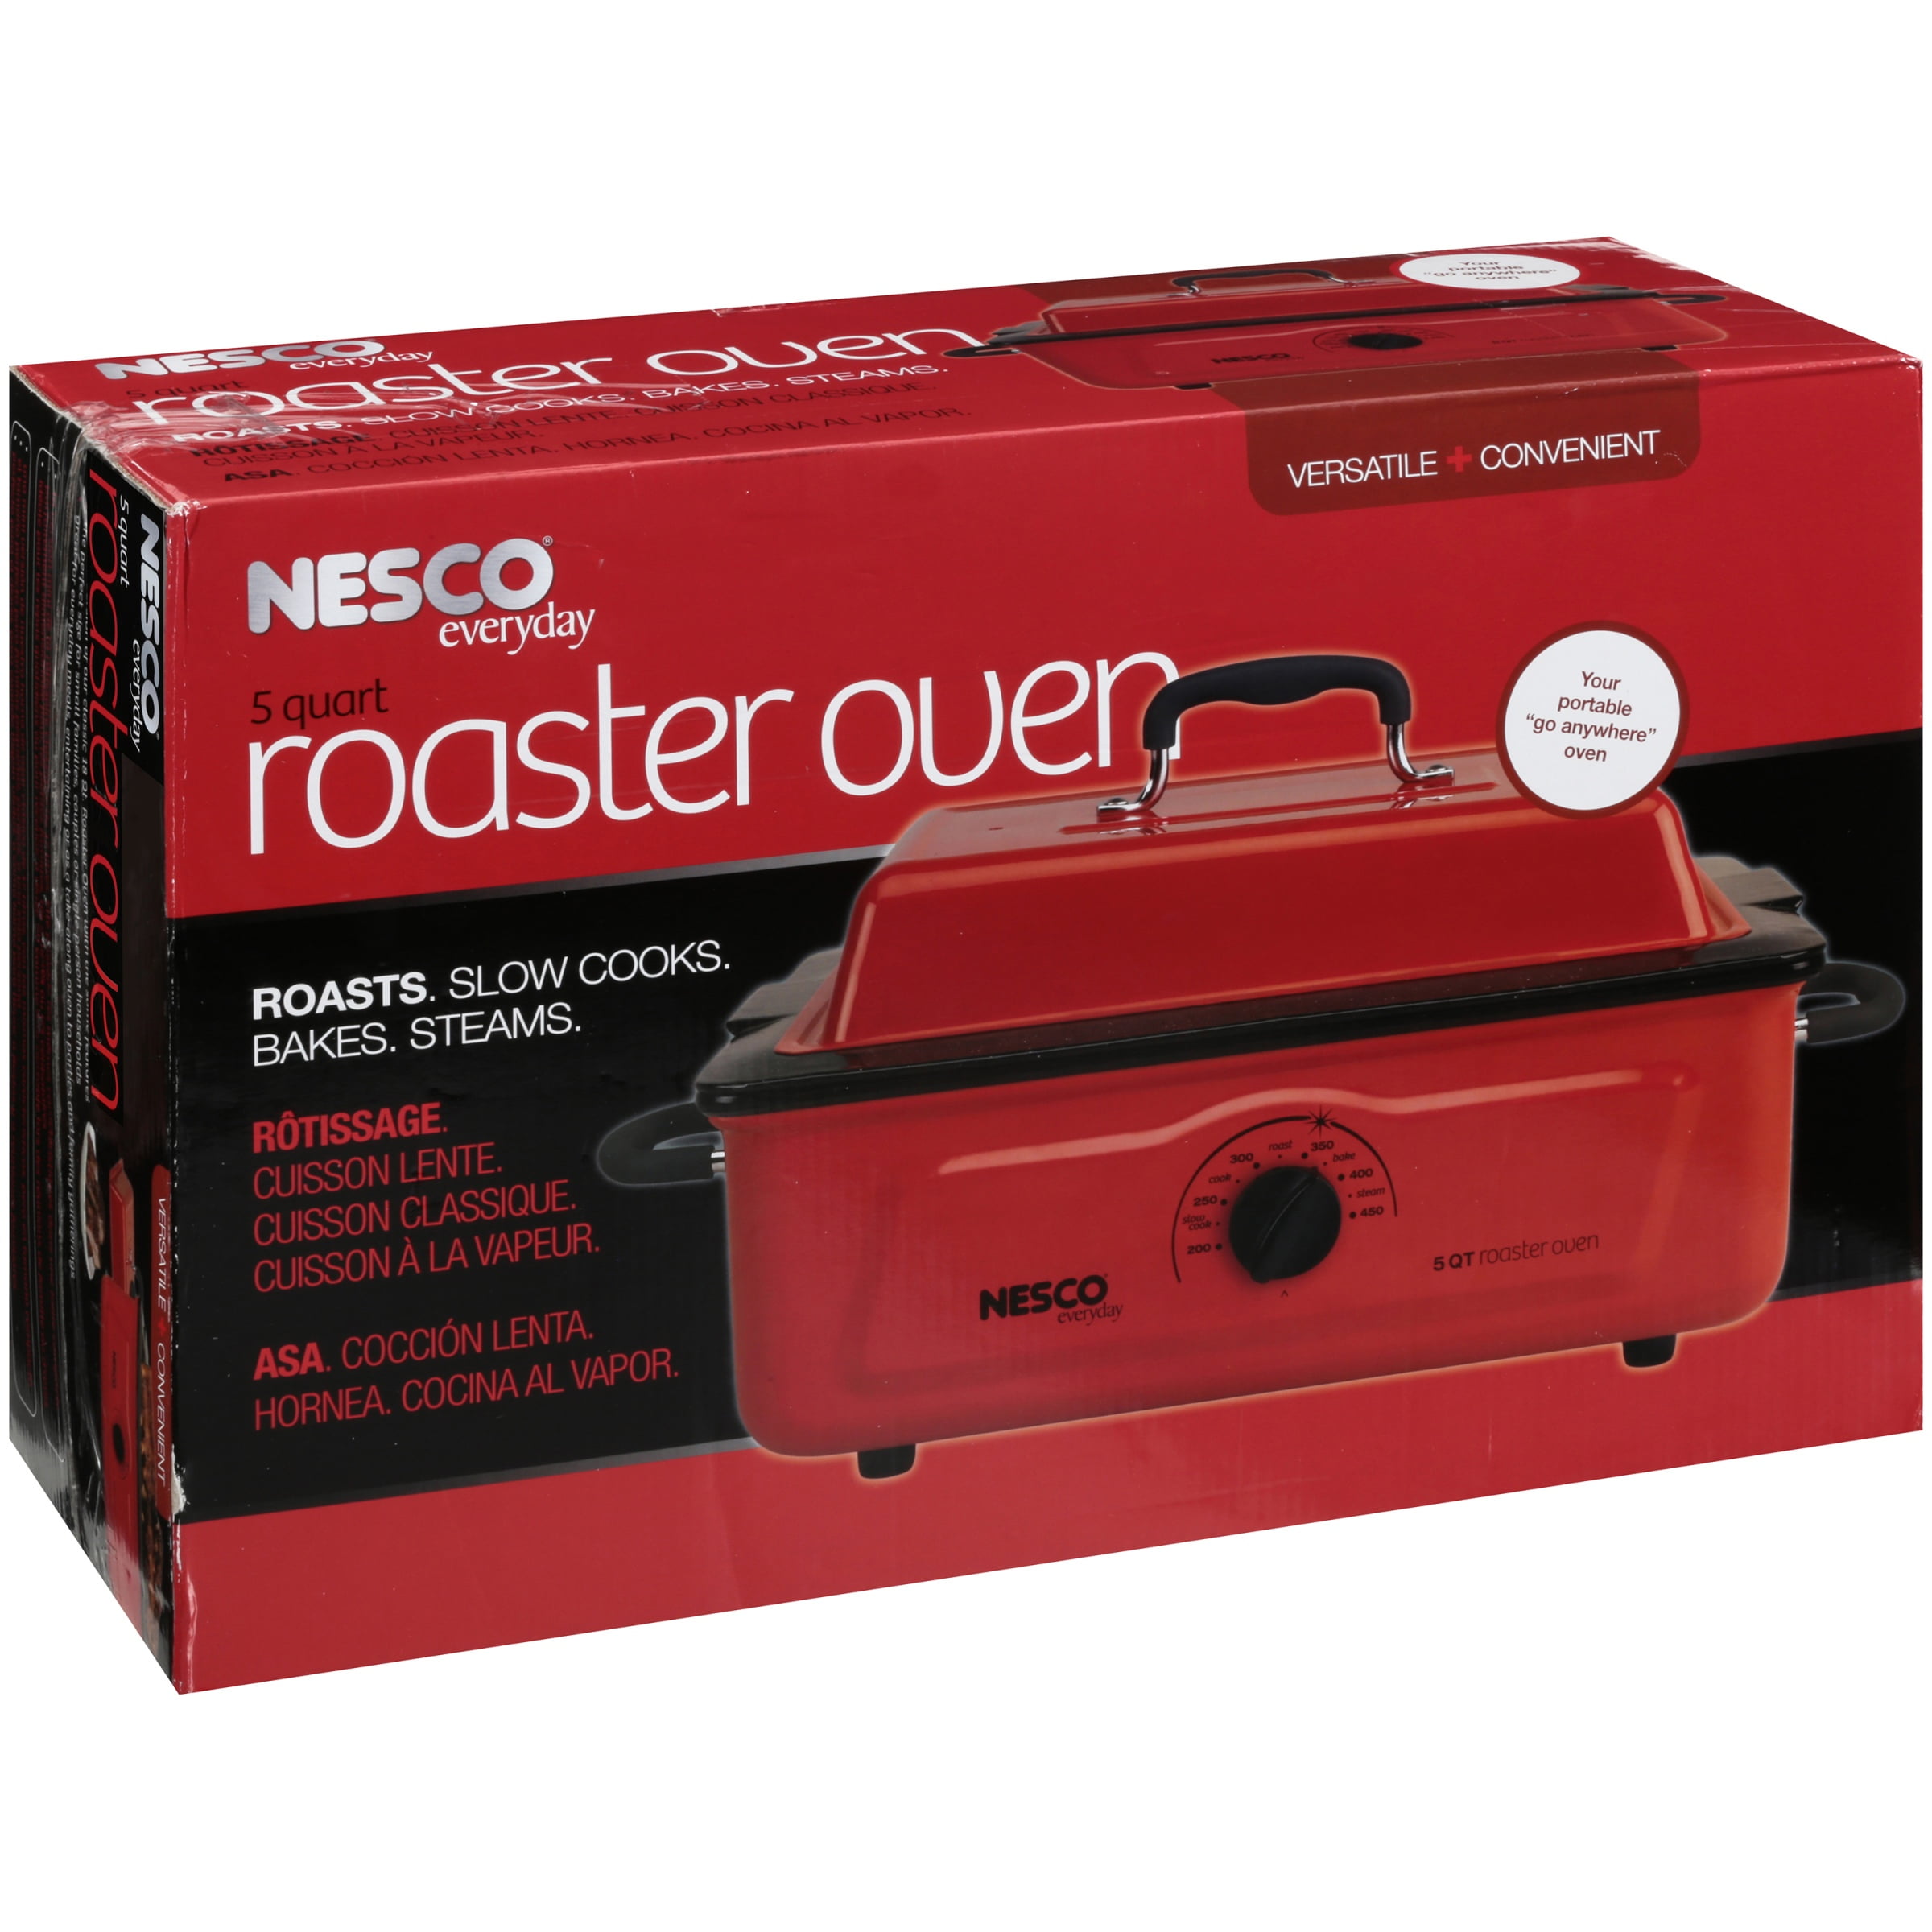 Nesco 5-Qt. Roaster #Review - It's Free At Last